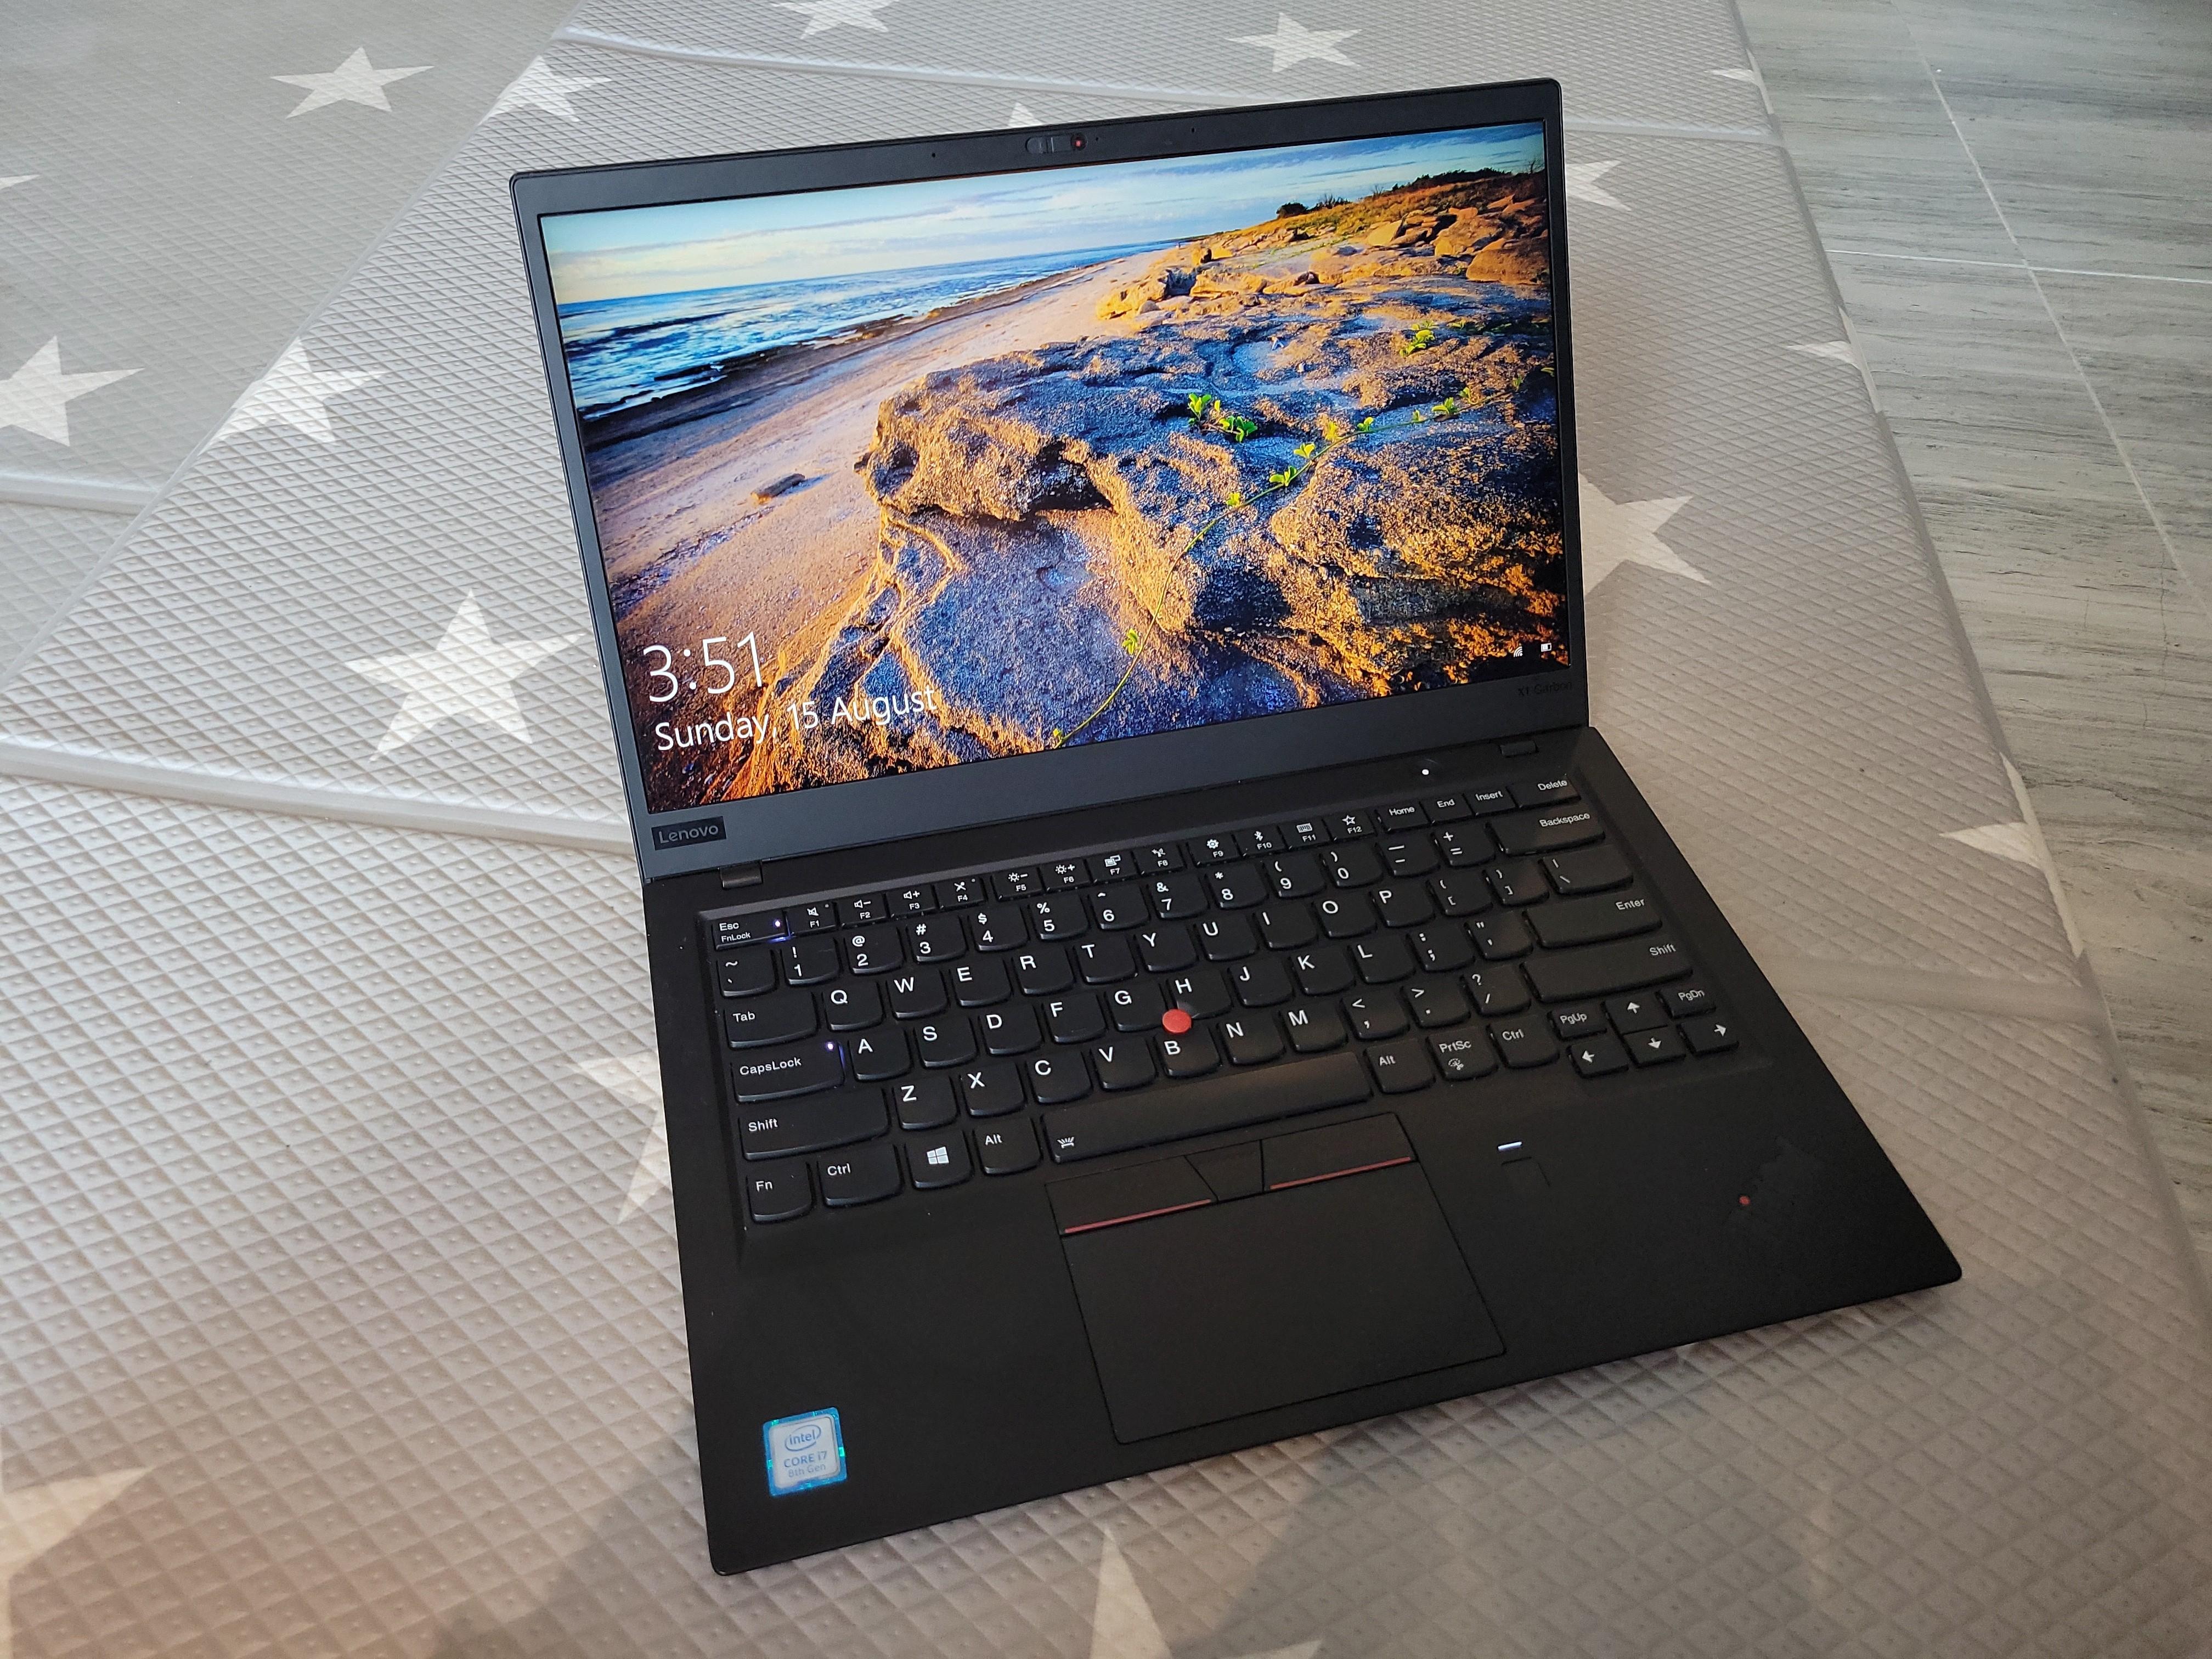 Lenovo ThinkPad X1 Carbon with Warranty (Core i7-8550U, 16GB RAM